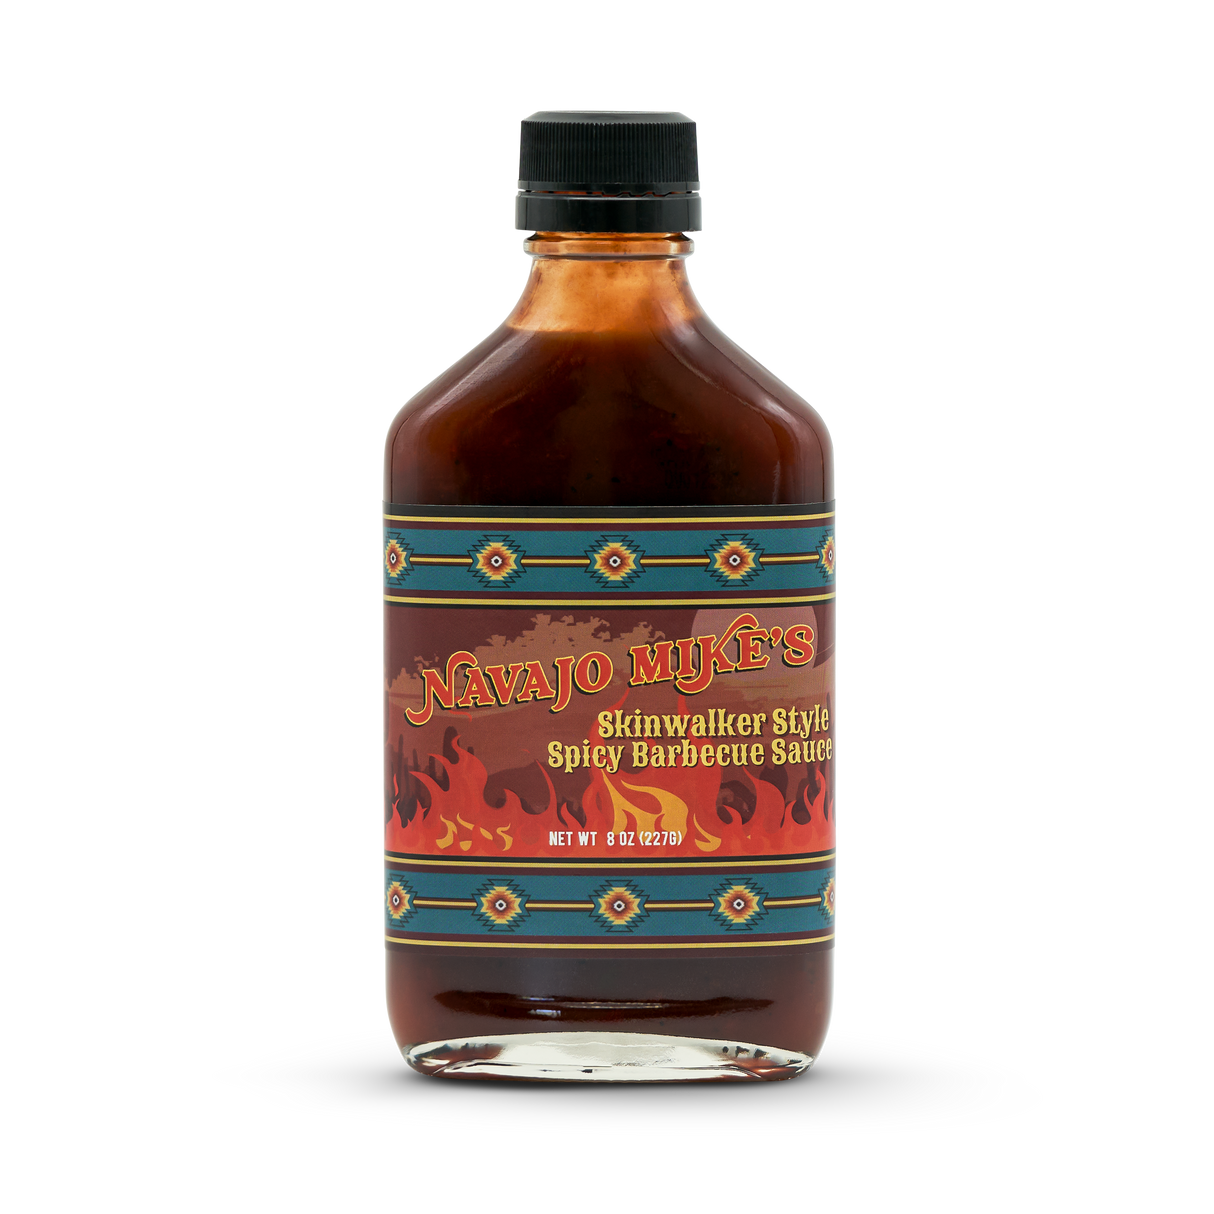 Navajo Mike's Skinwalker Style Barbecue Sauce